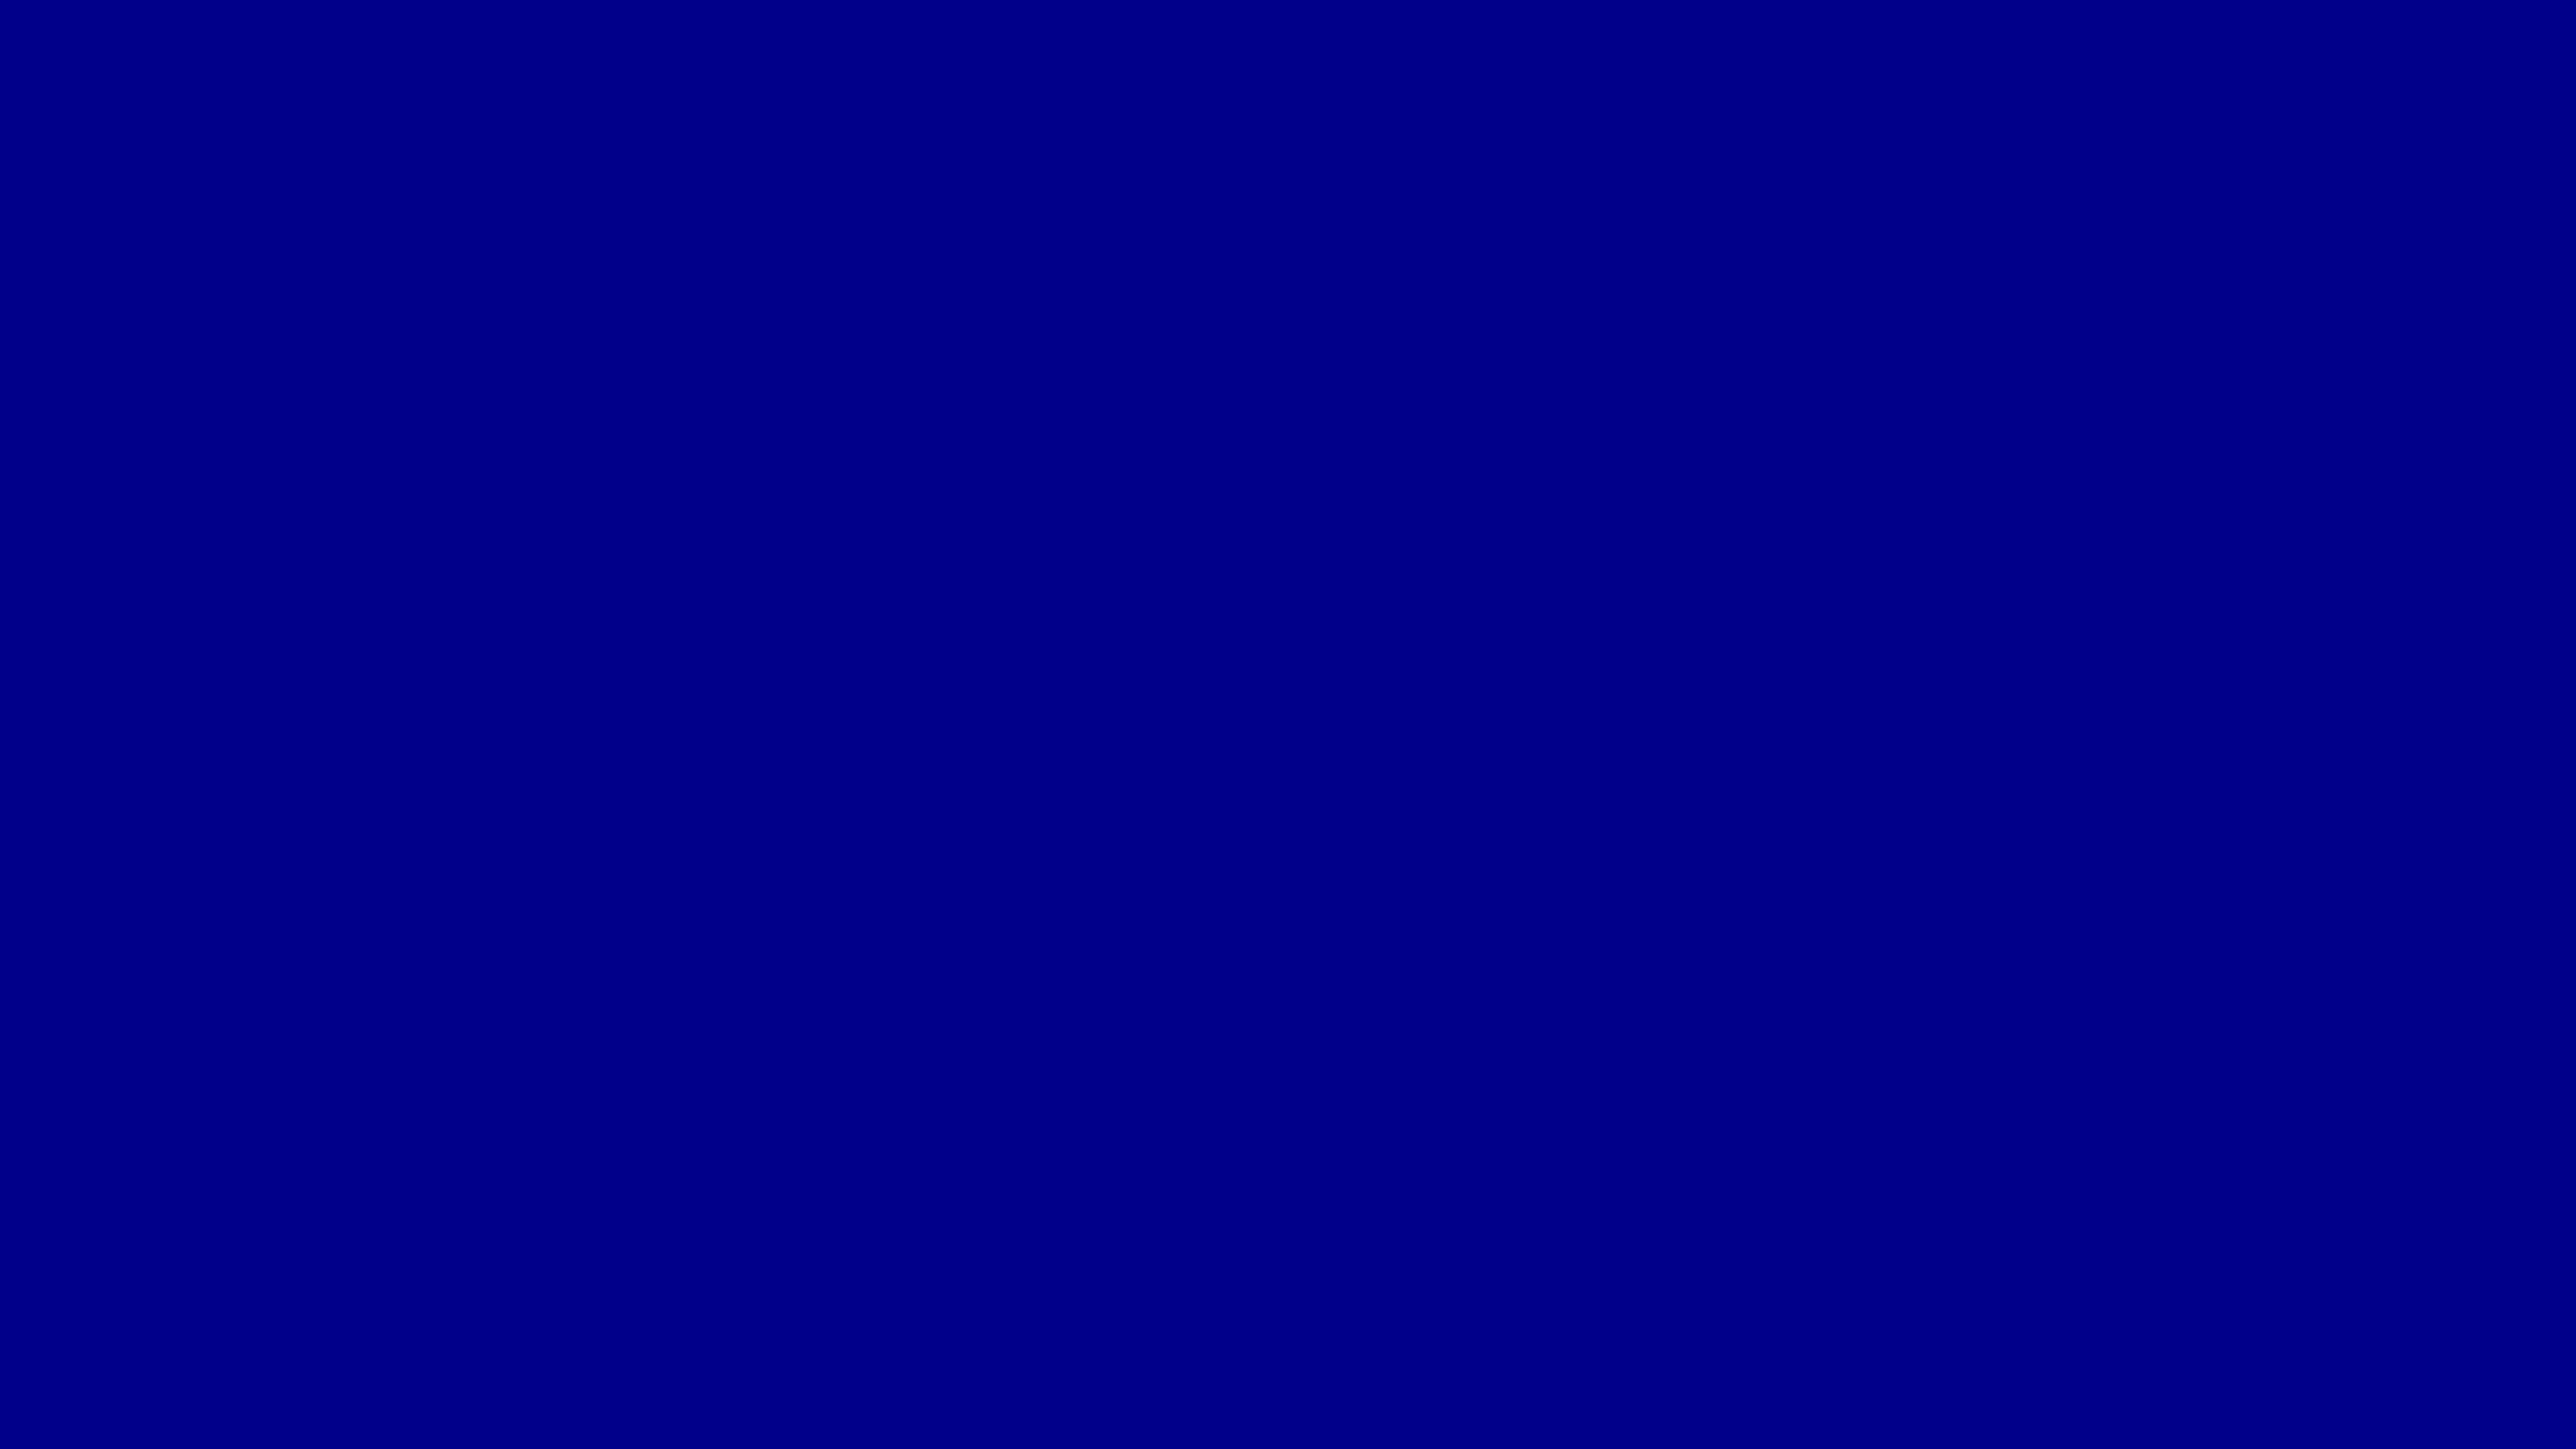 7680x4320 Dark Blue Solid Color Background